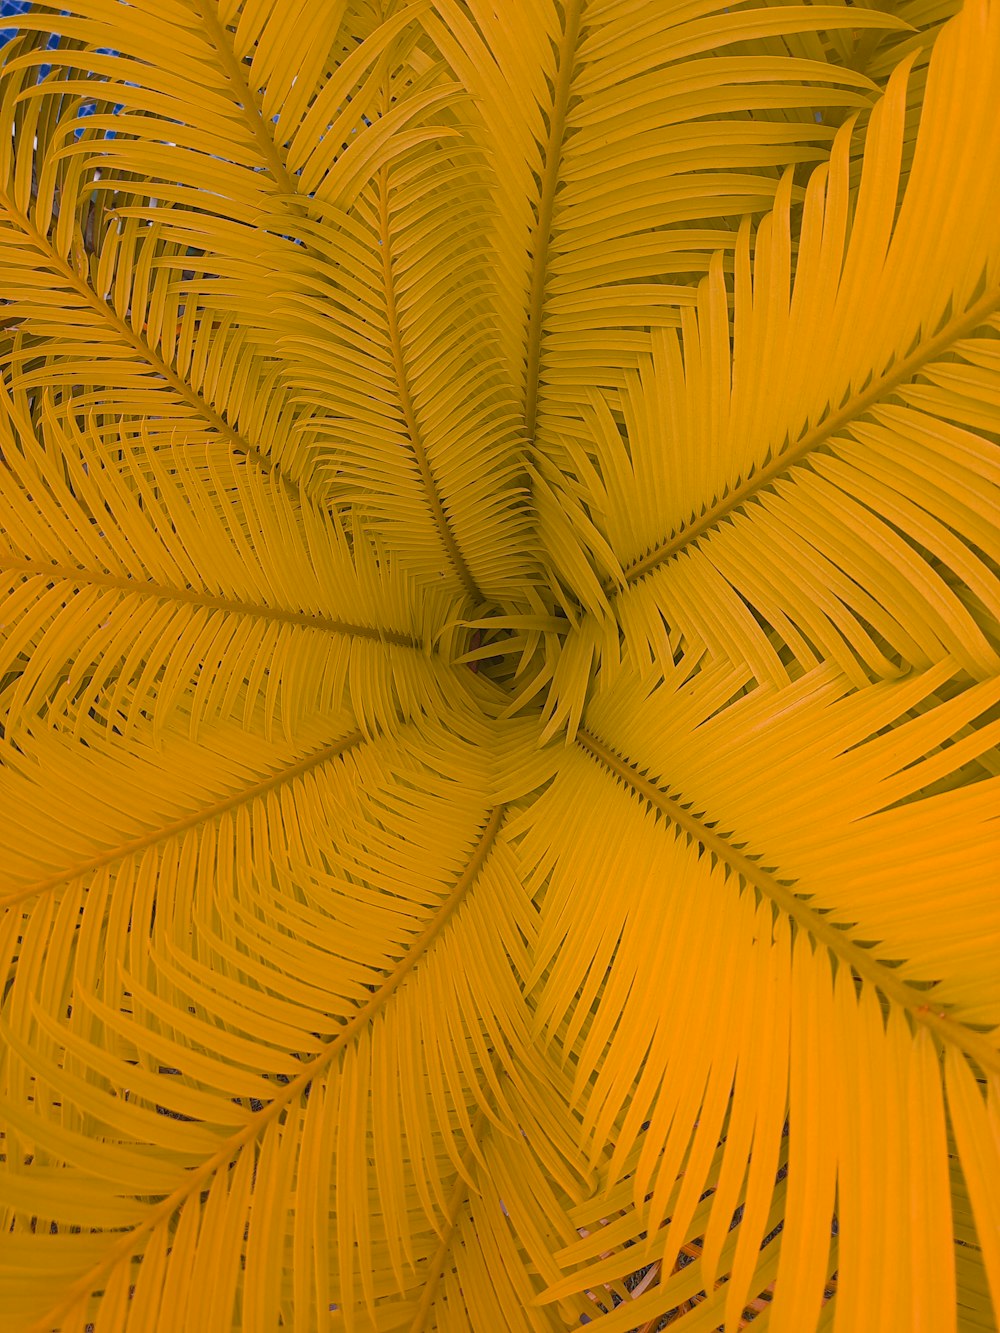 a close up of a yellow palm tree